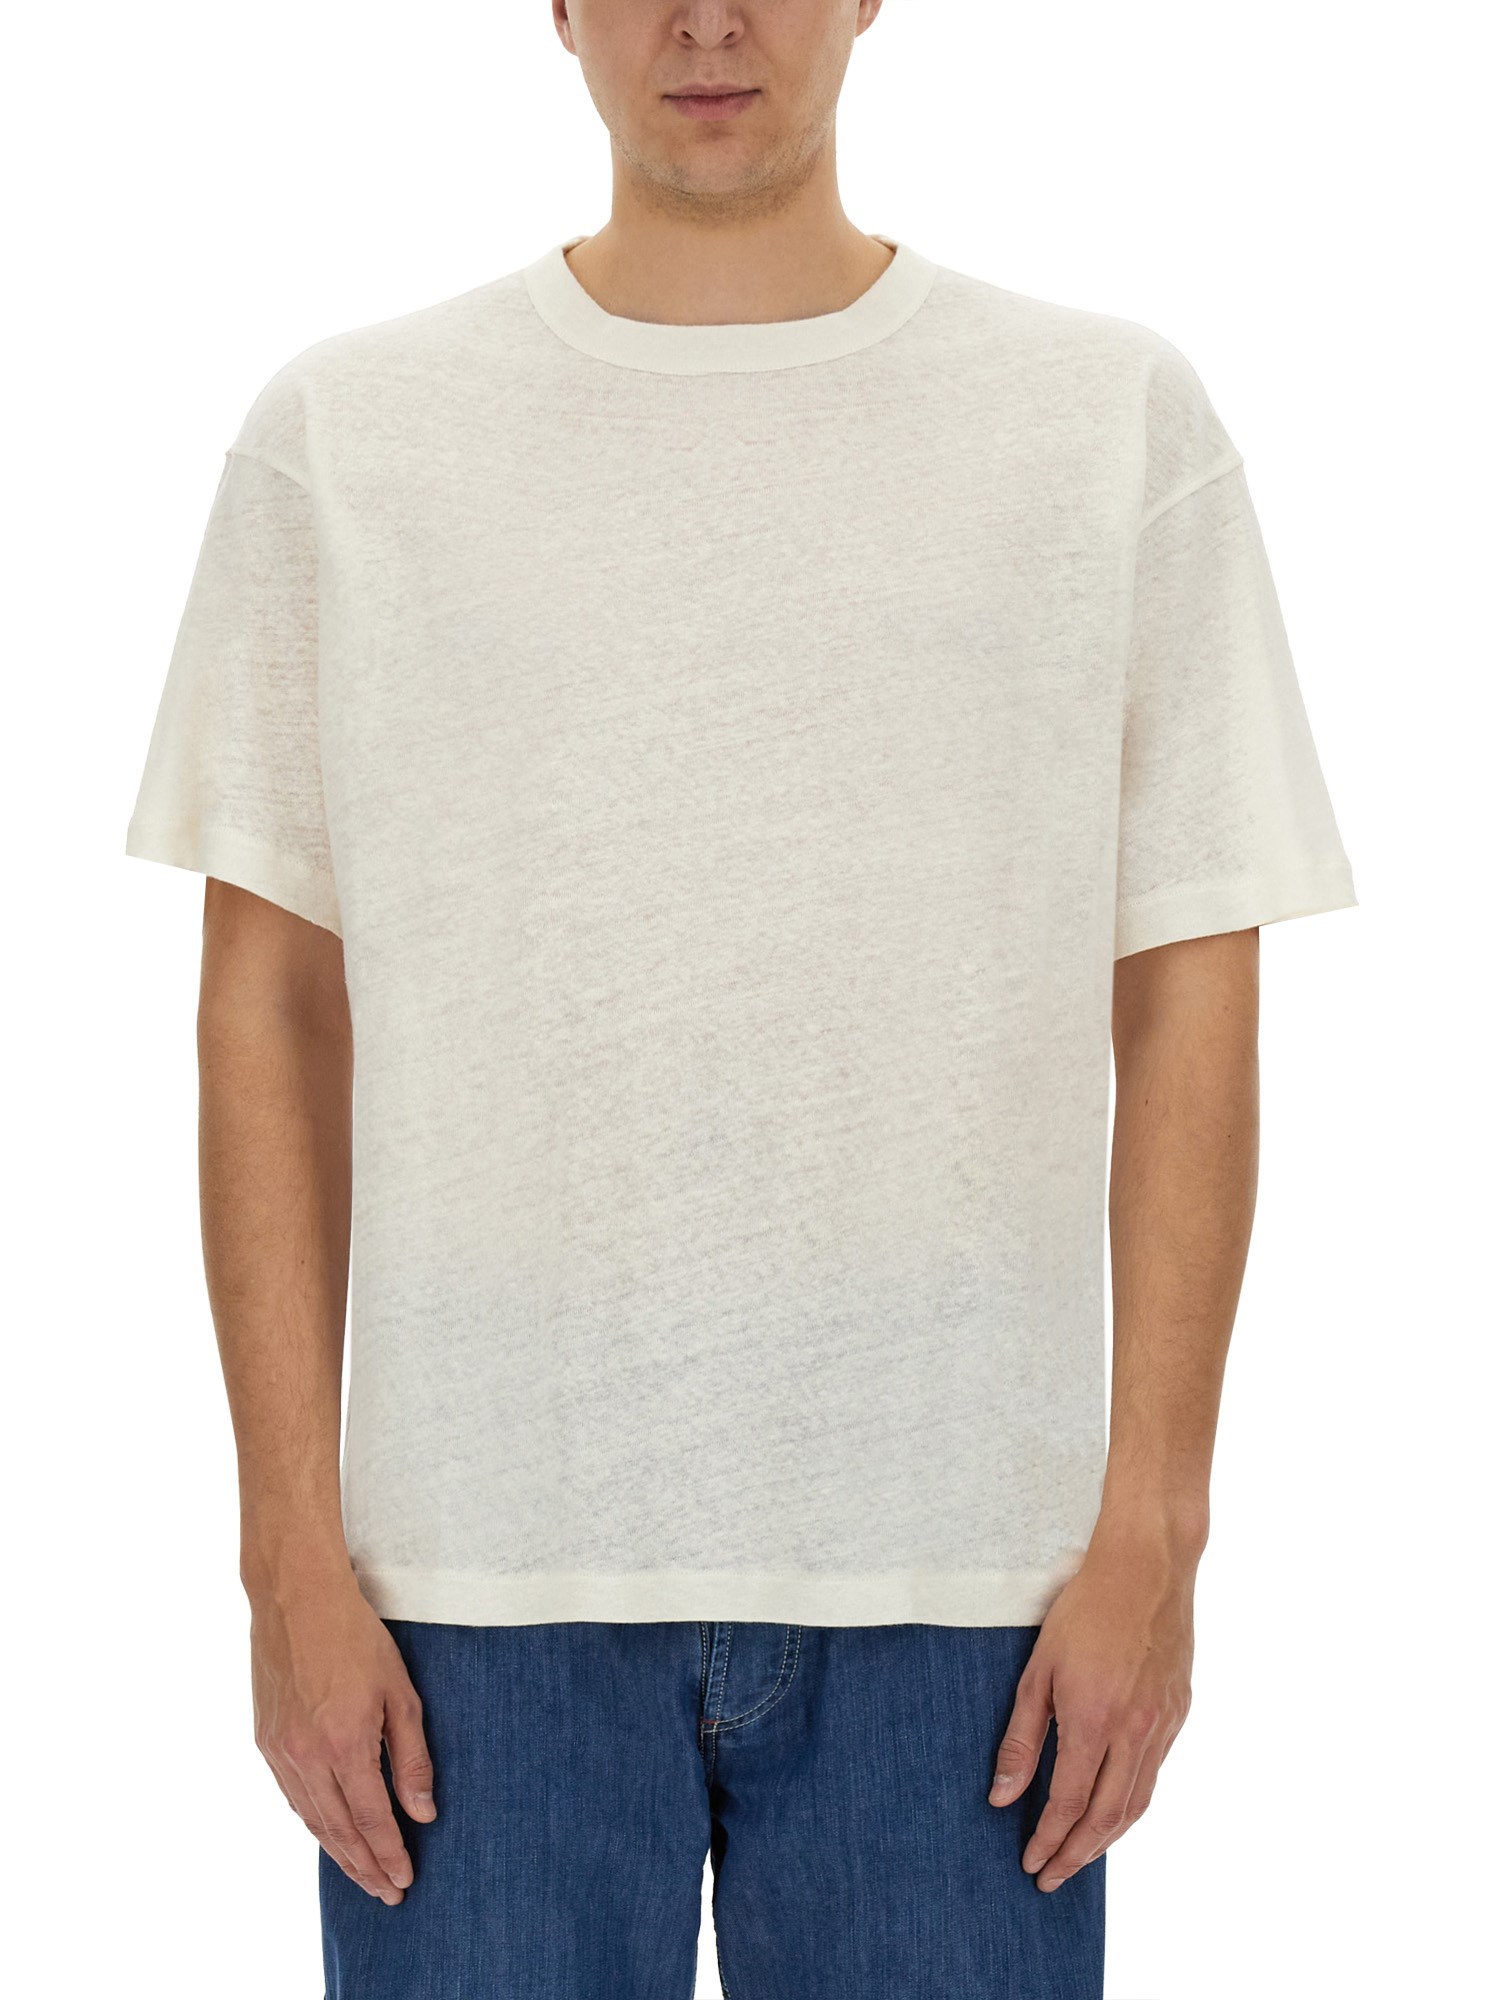 Ymc ymc cotton and linen t-shirt